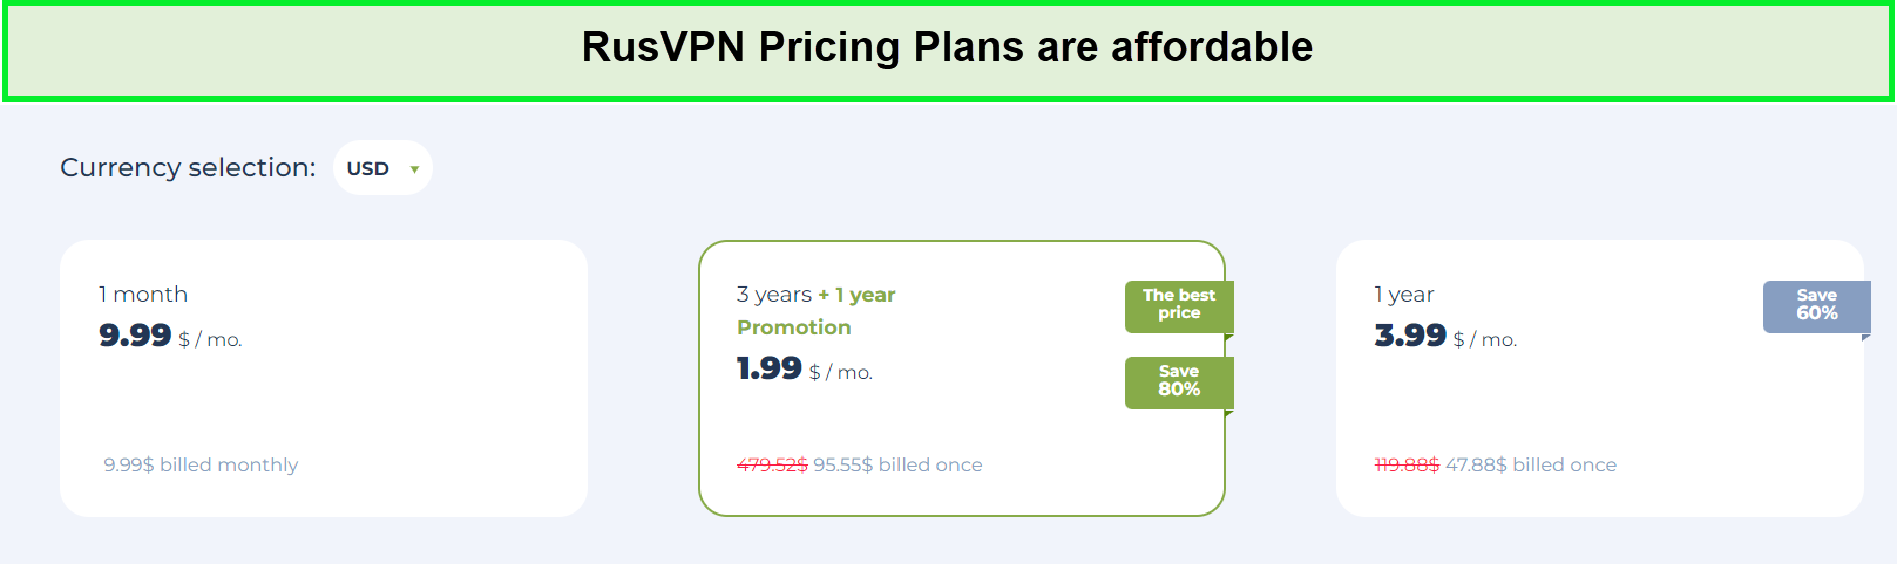 rusvpn-pricing-plans